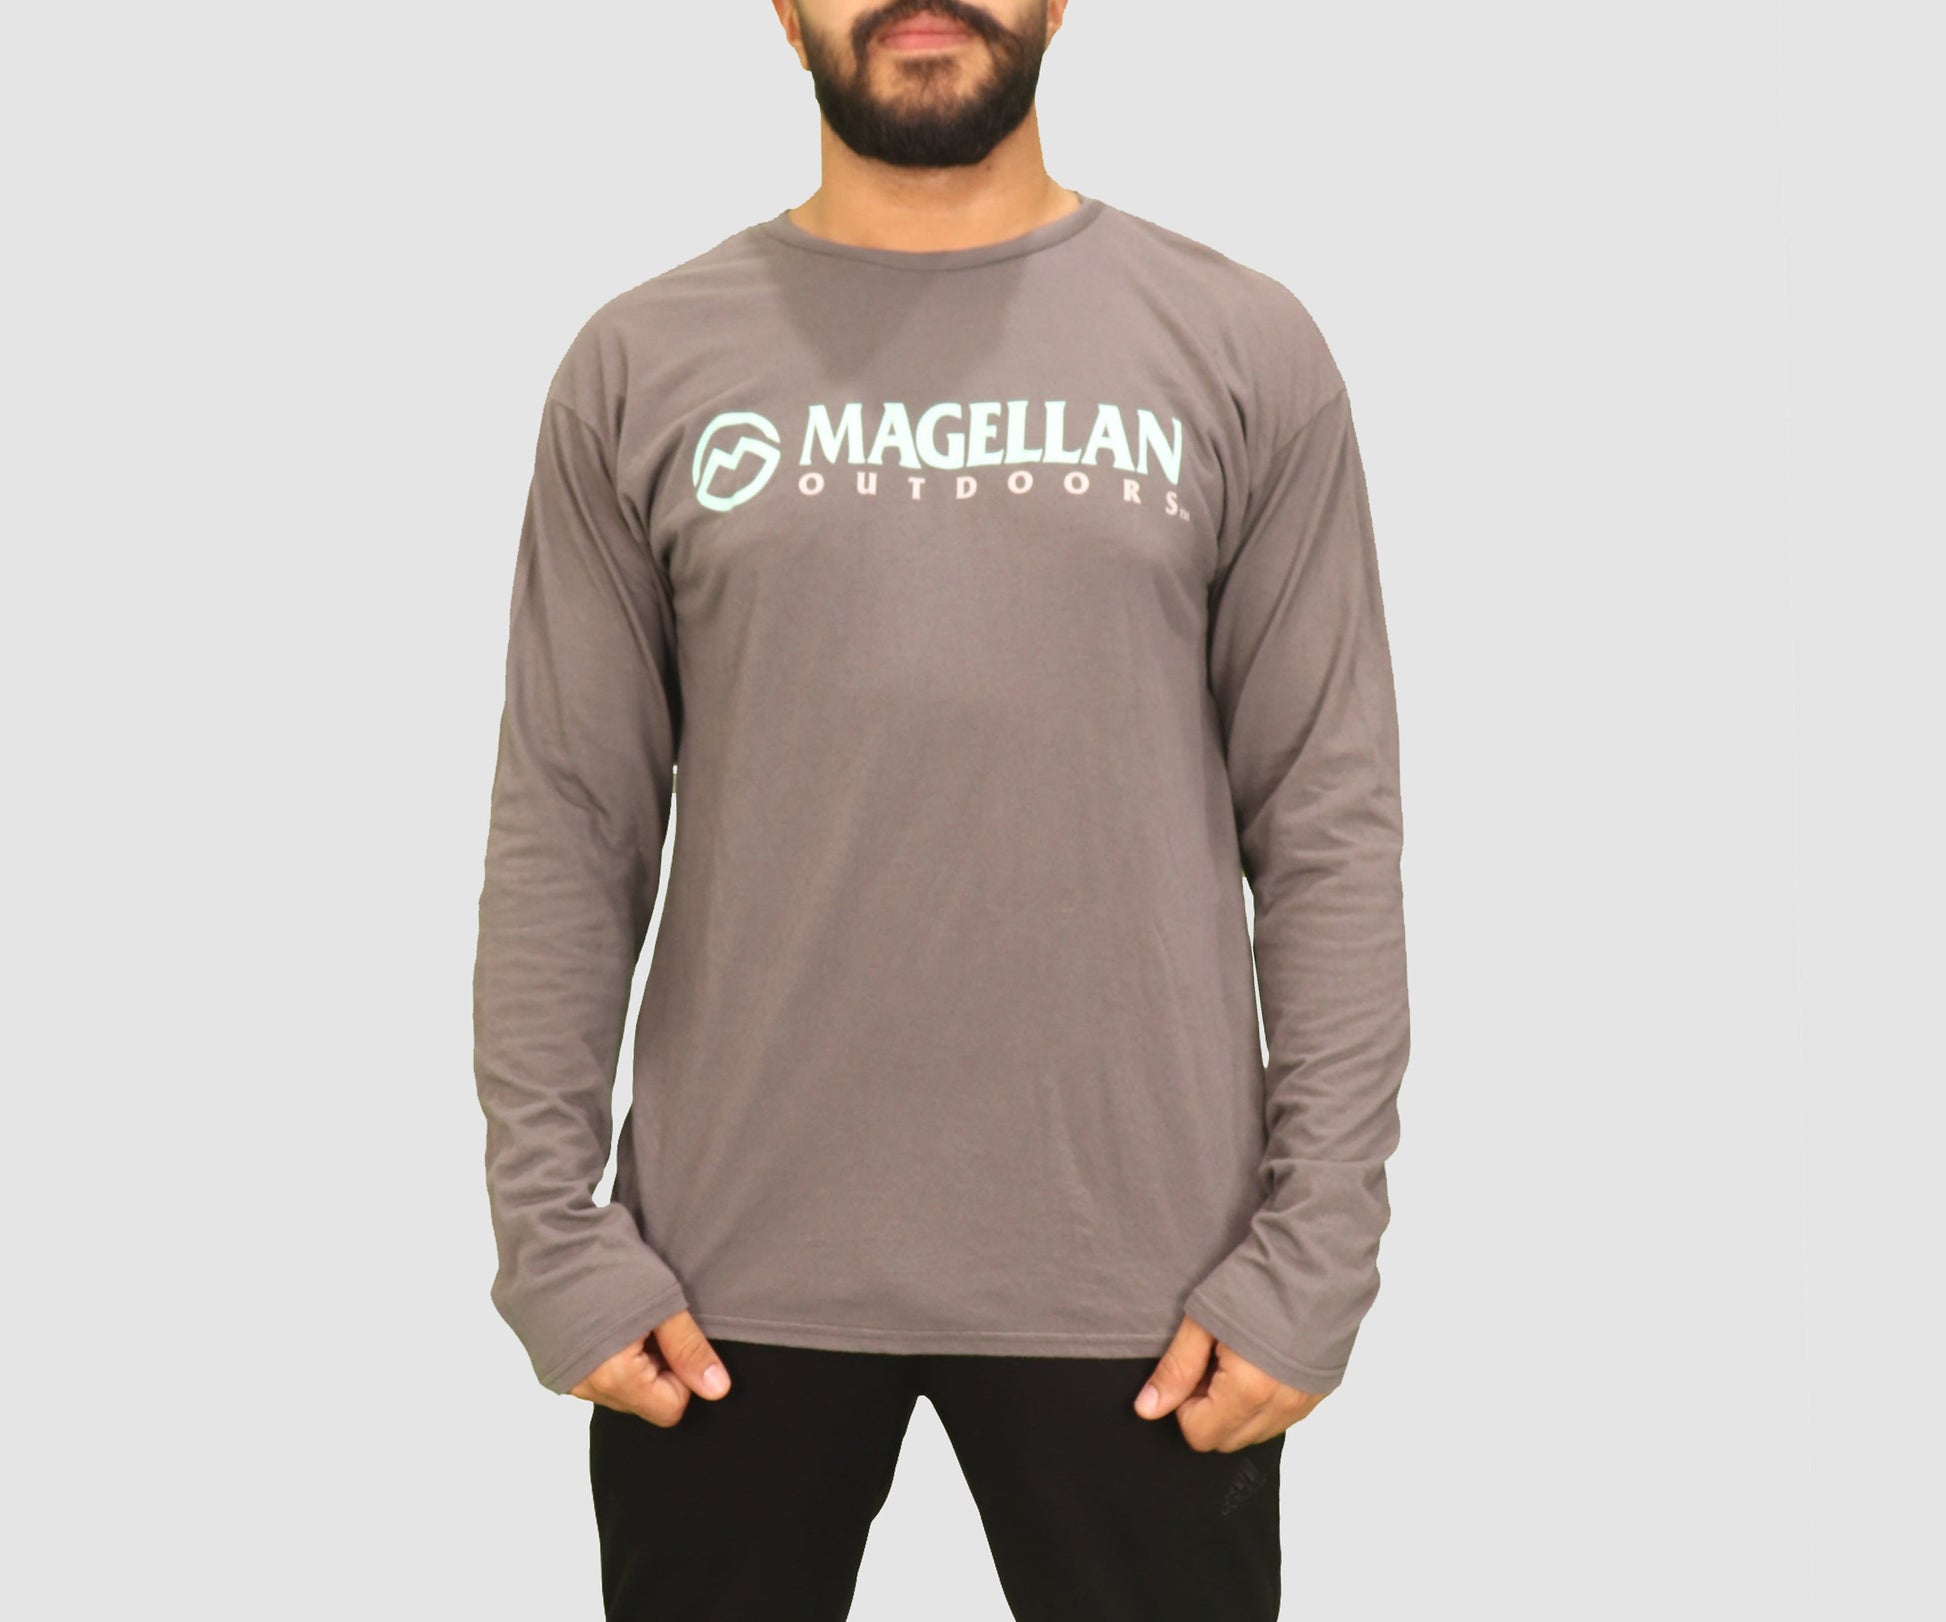 Magellan Mens Tops Large / Grey Long Sleeve Top